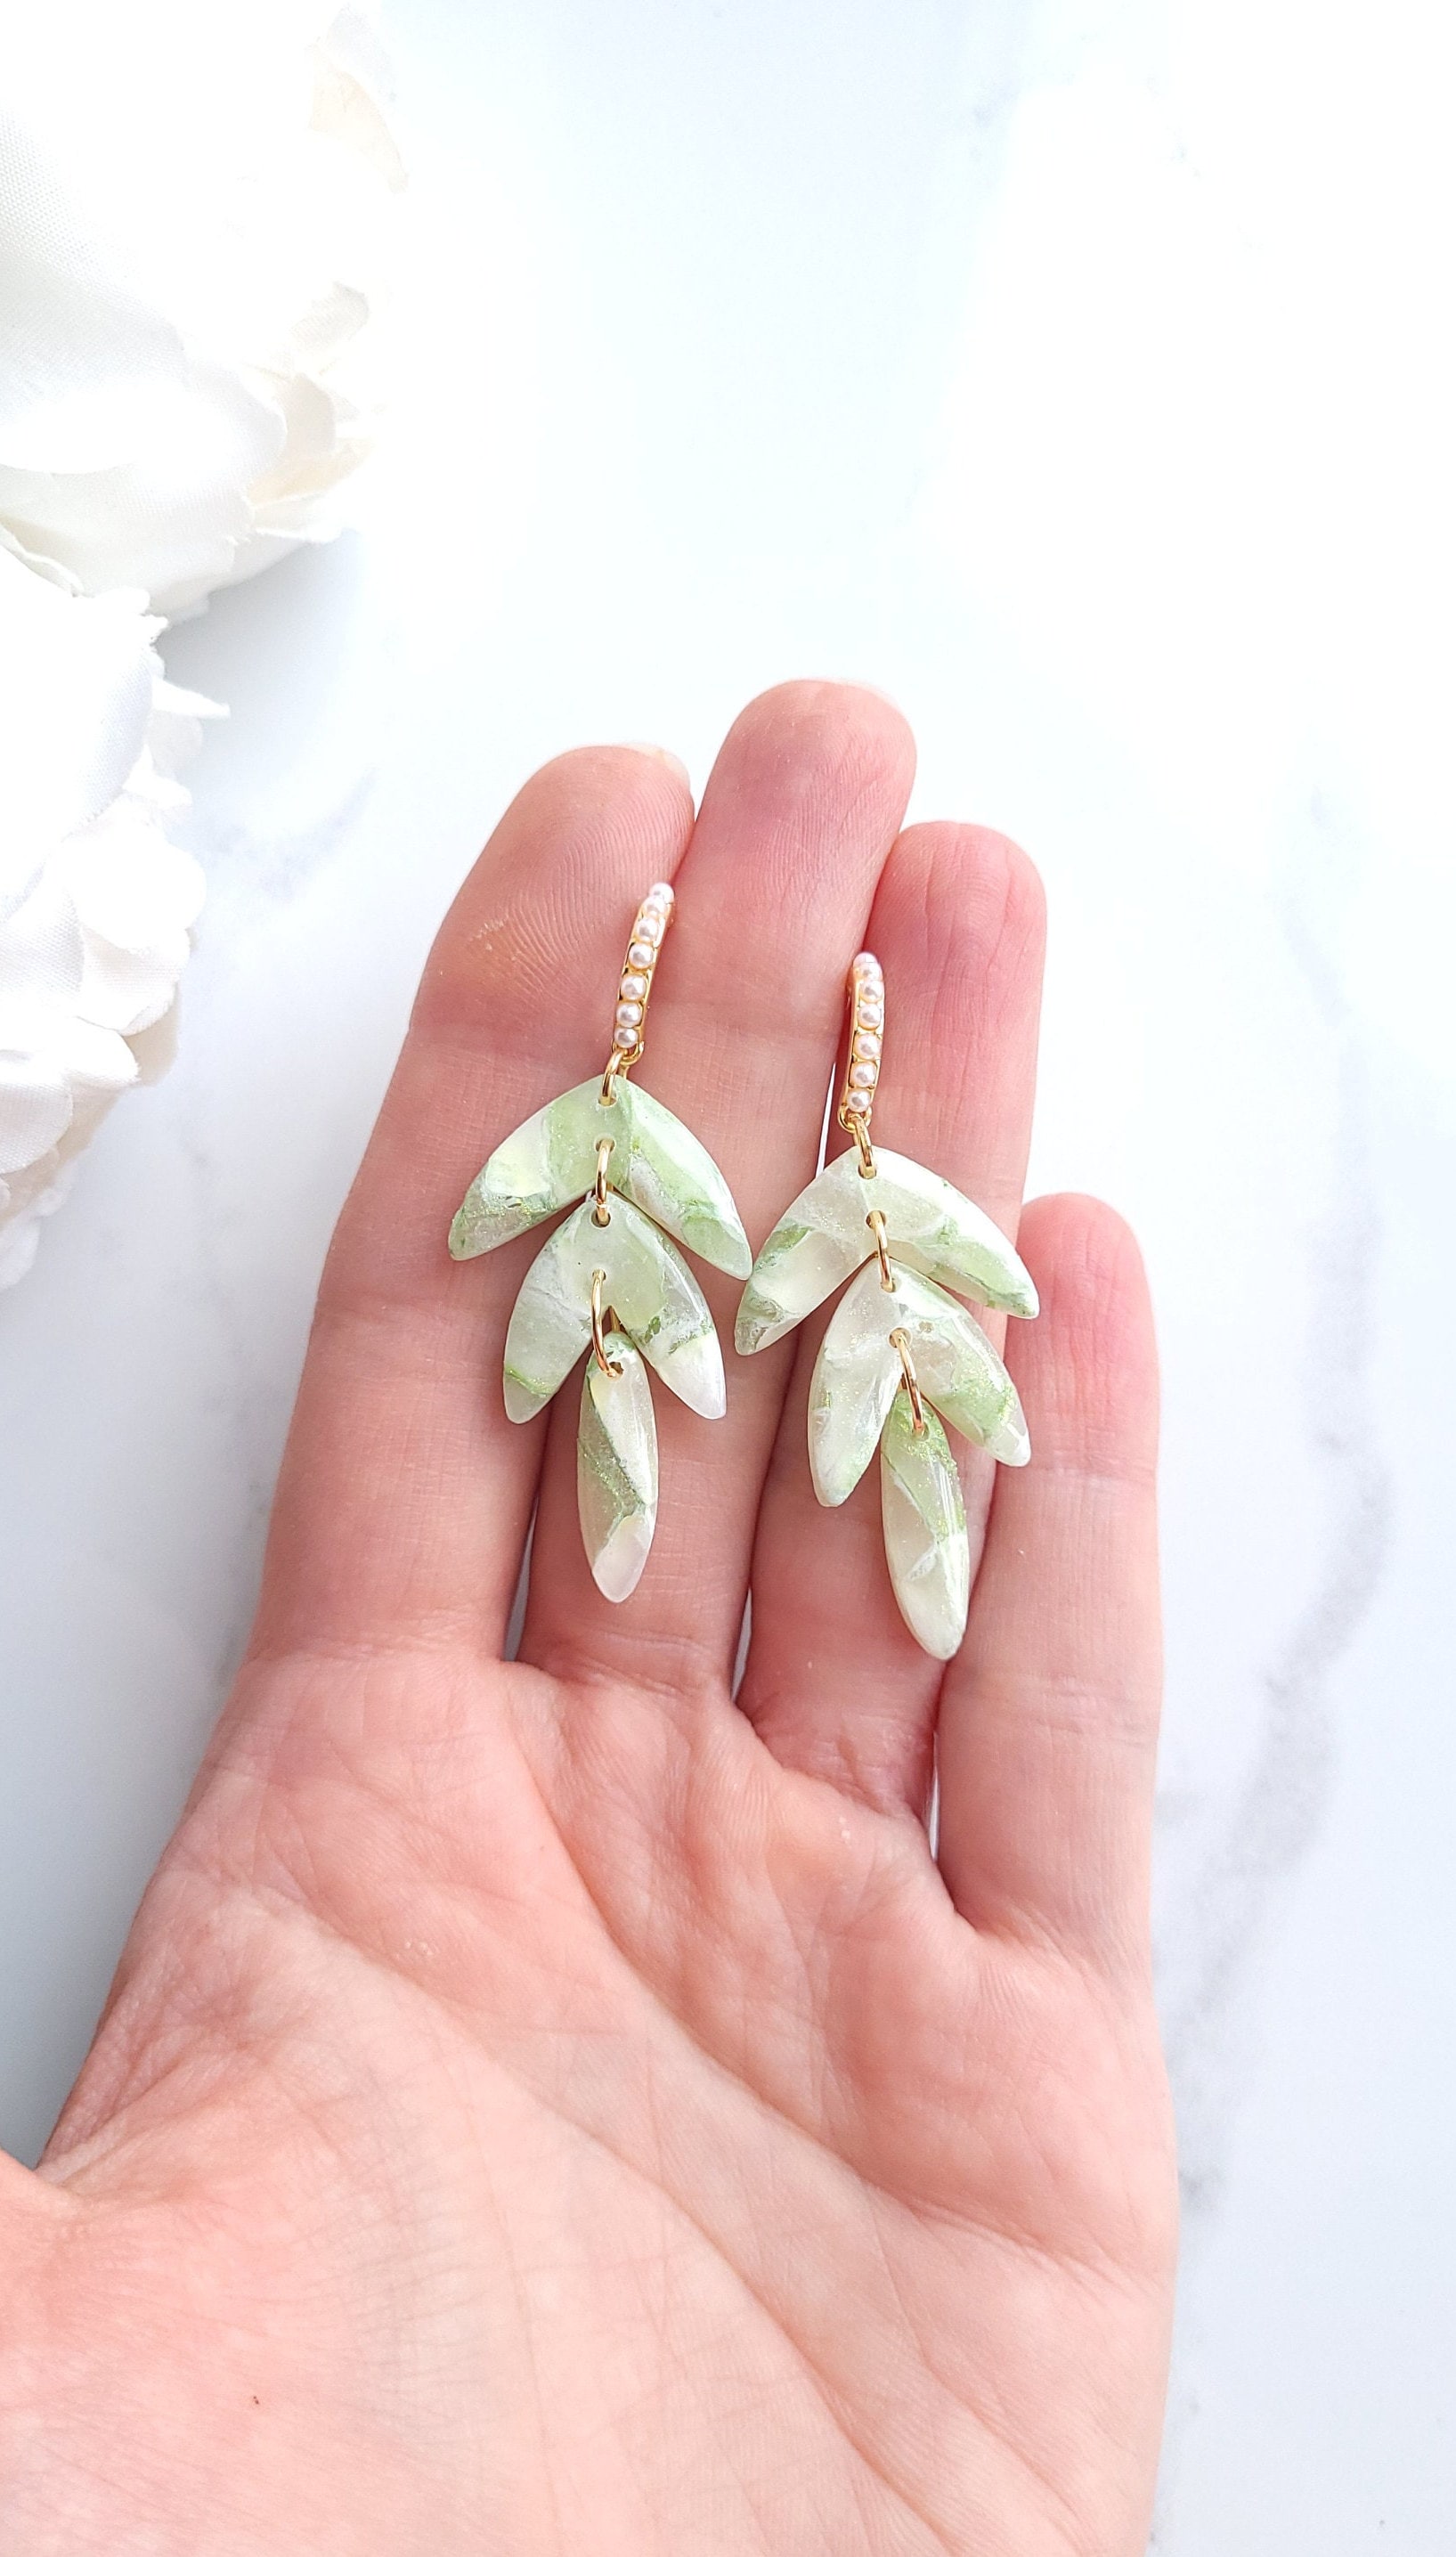 Light Green, White & Gold Marble Earrings | Handmade Polymer Clay Statement Dangle